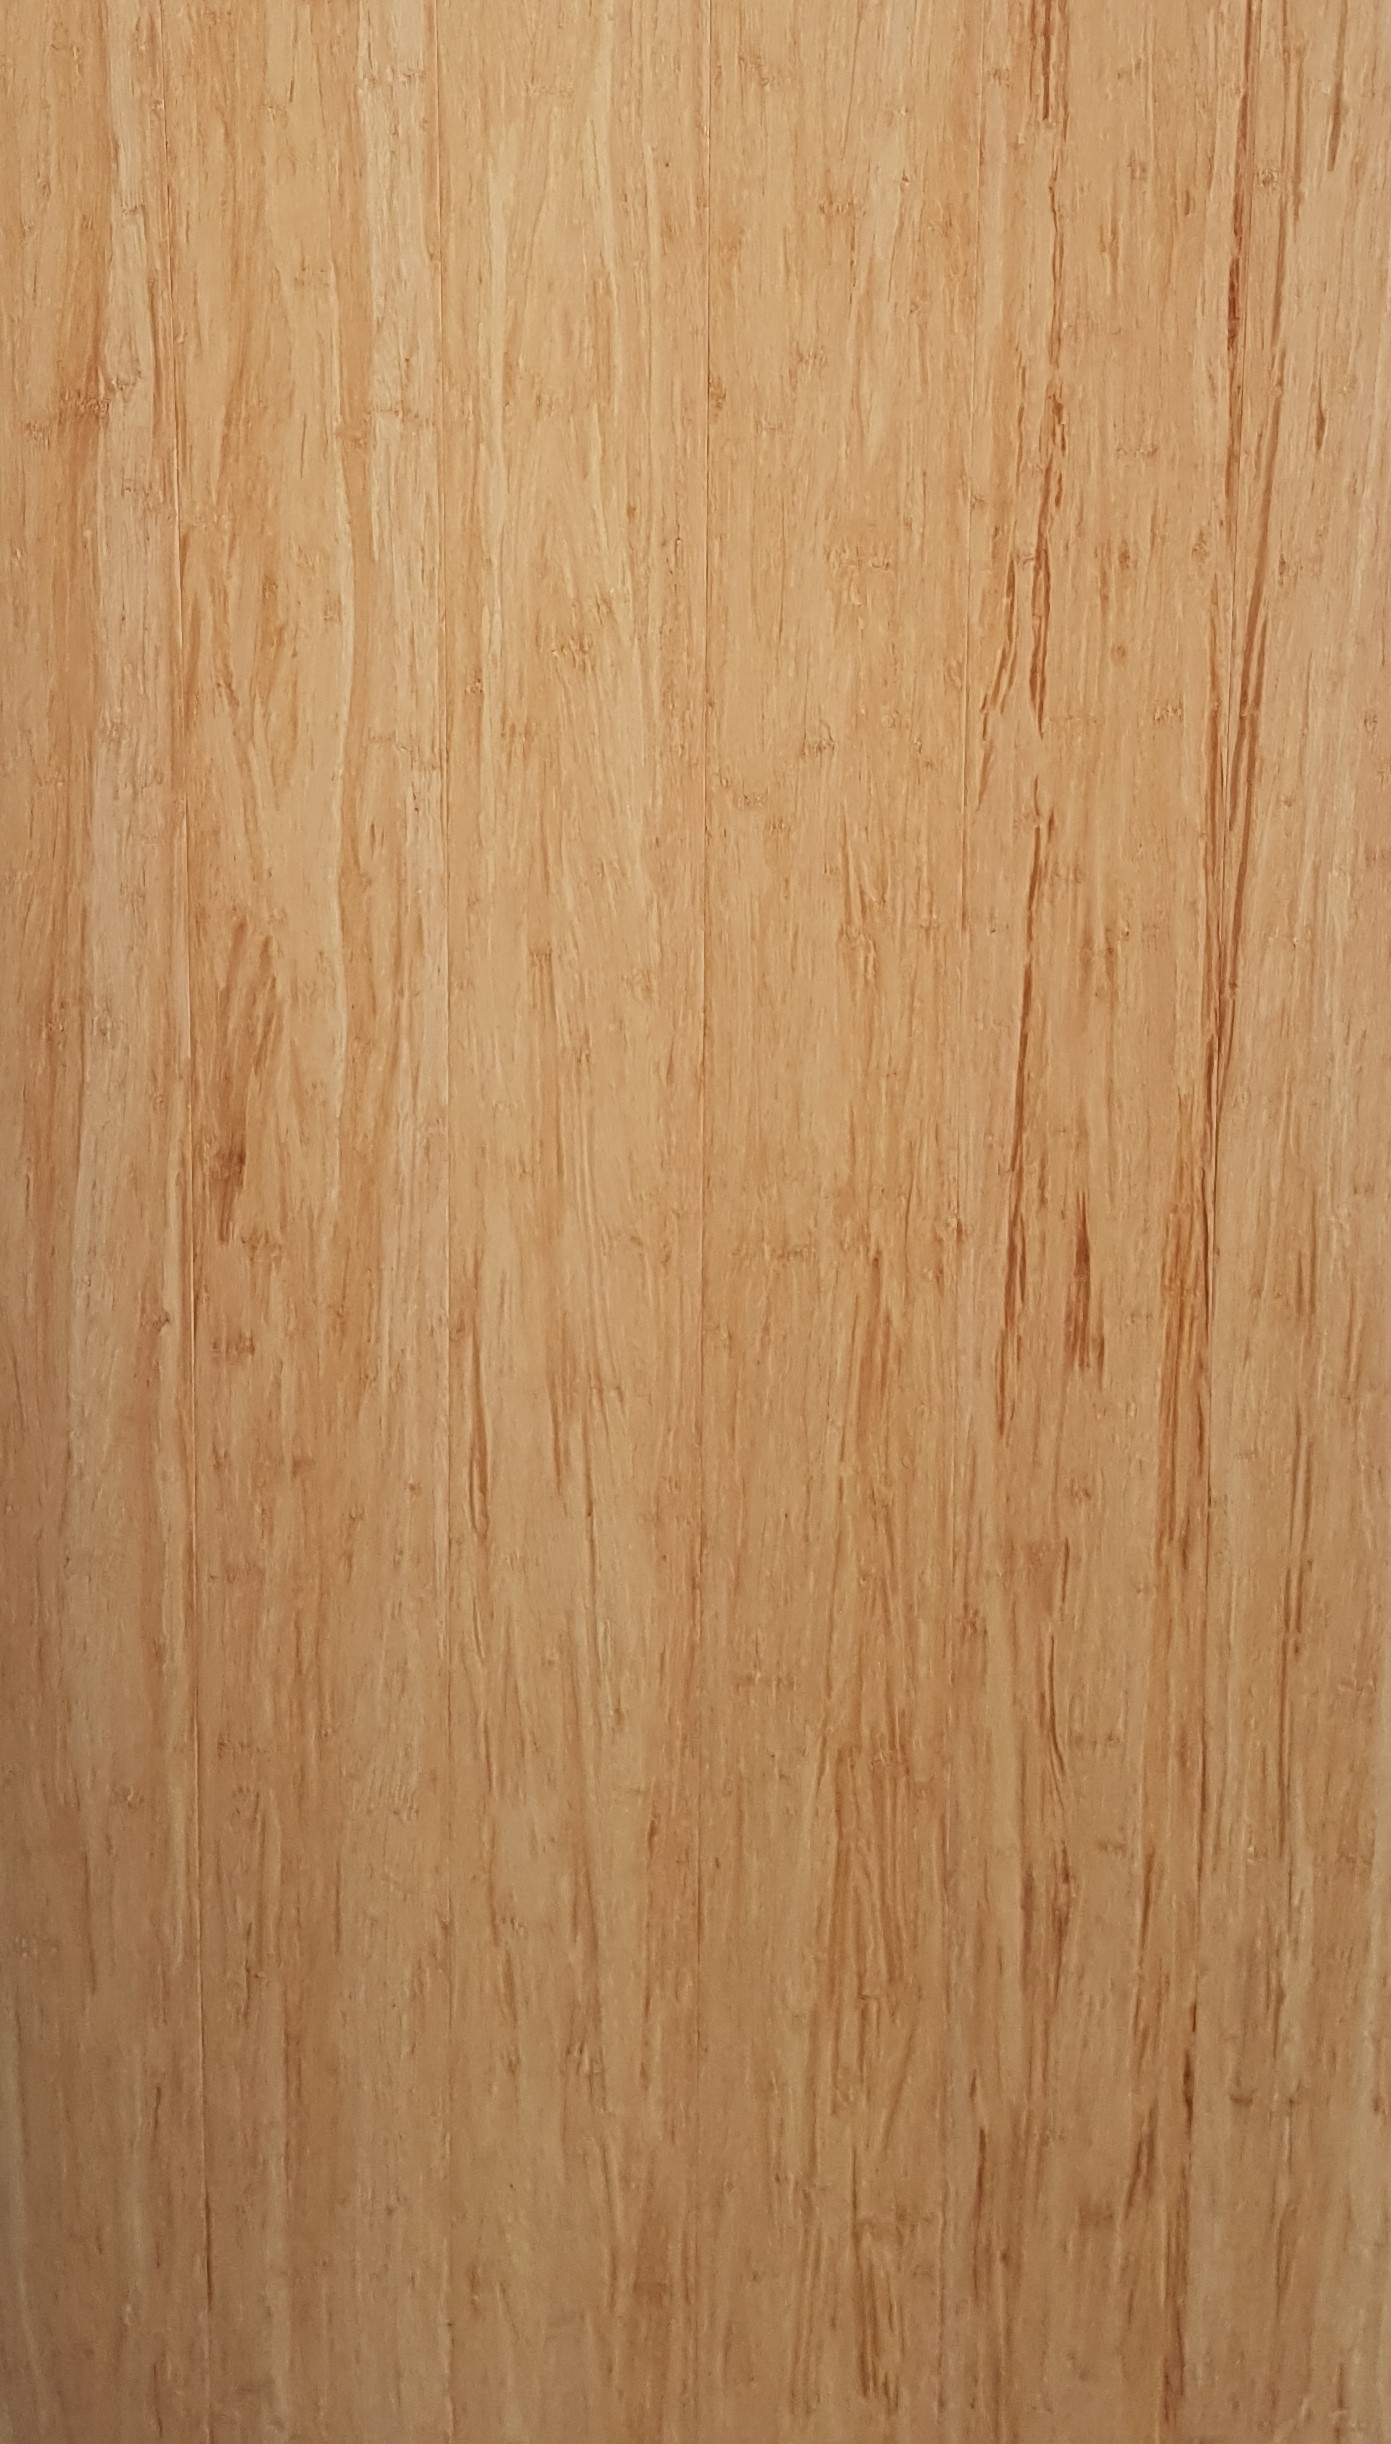 Natural Bamboo Flooring 1830mm X 135mm, Natural Bamboo Hardwood Flooring